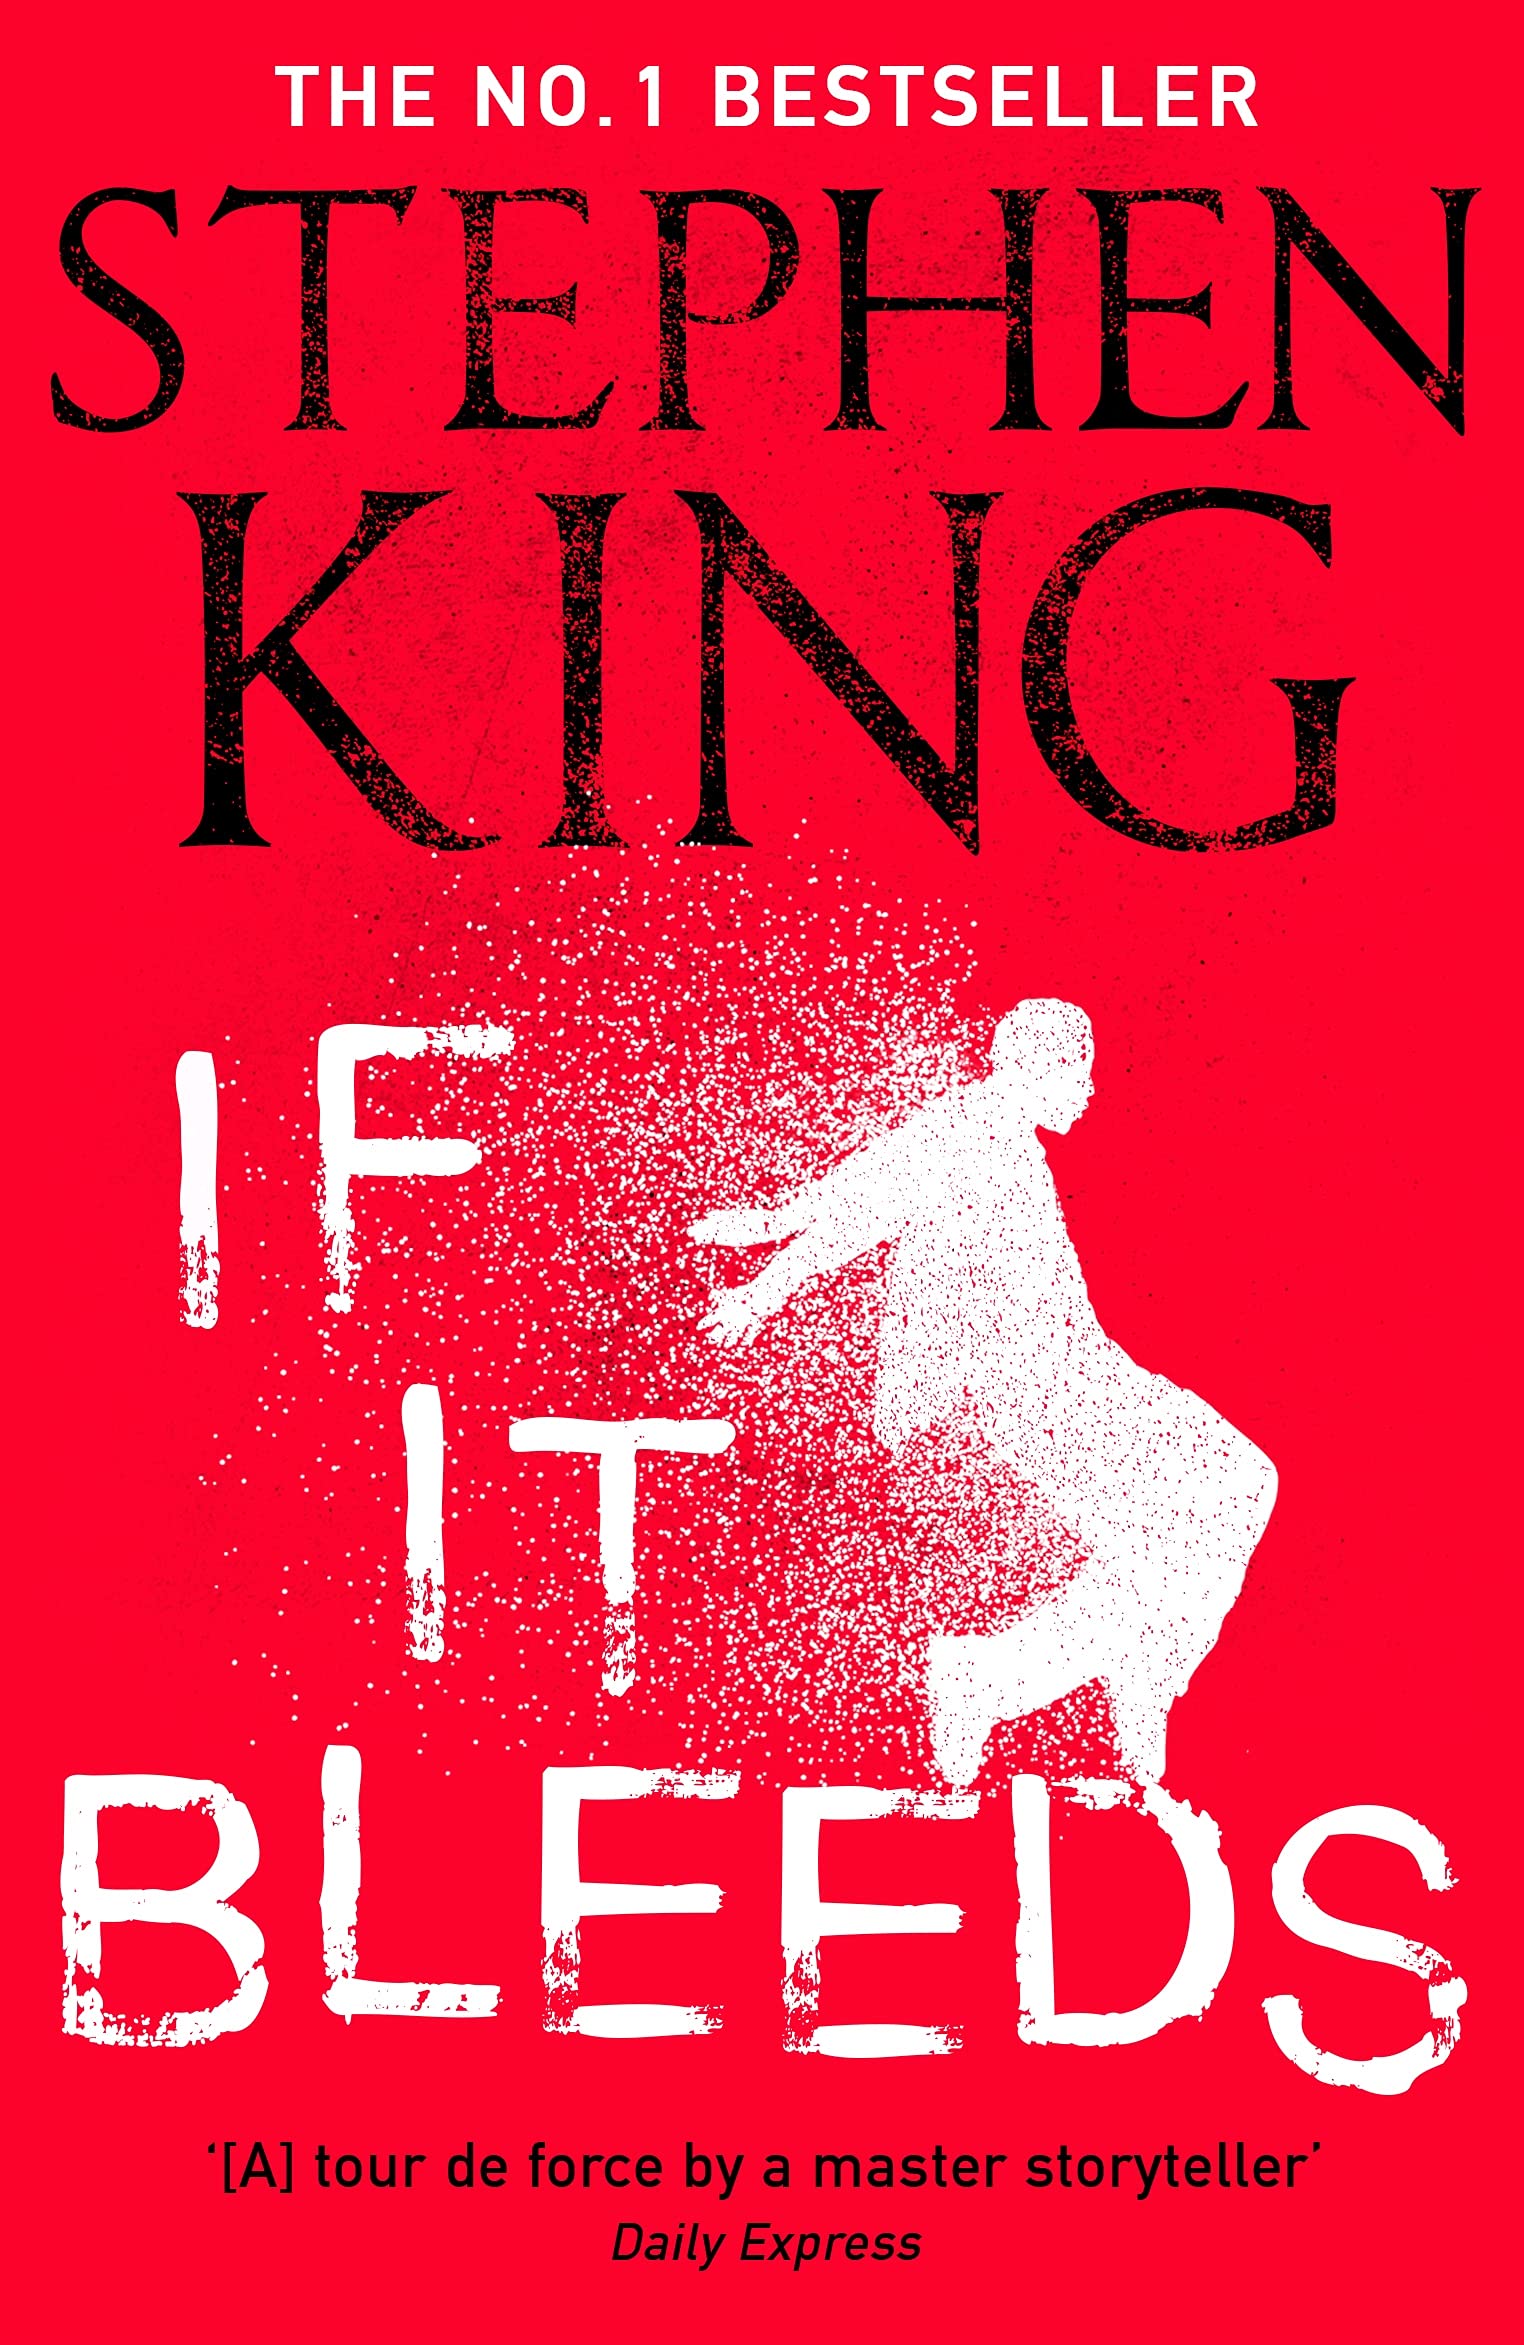 If It Bleeds | Stephen King